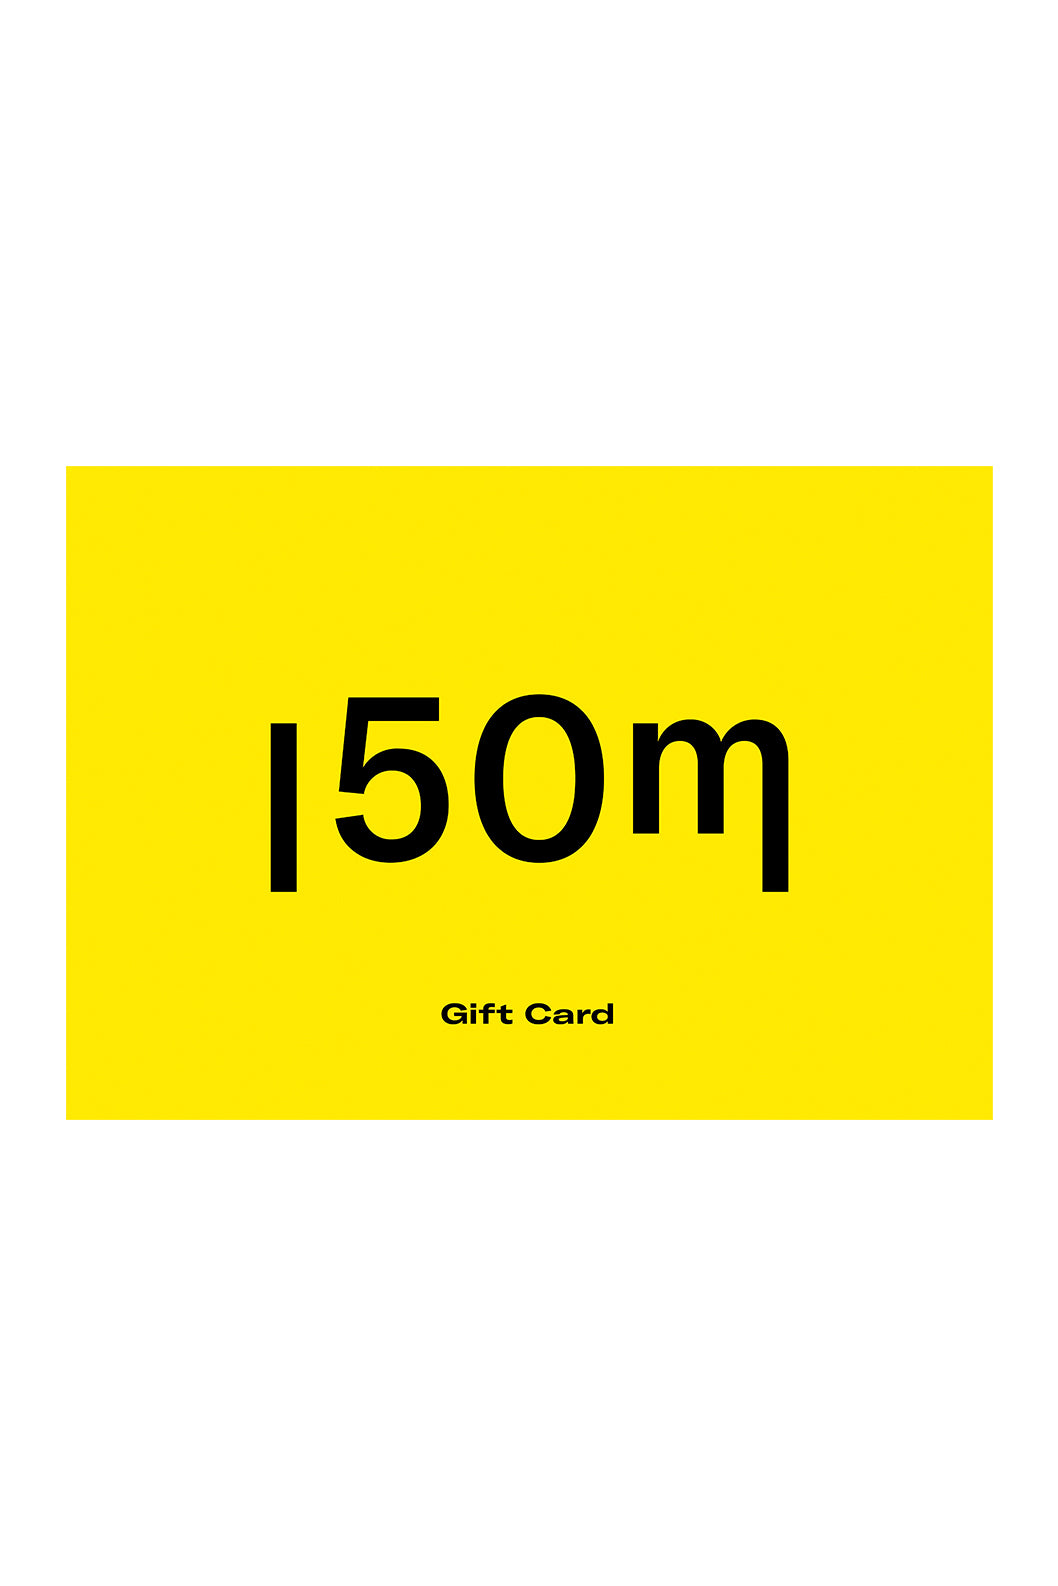 50m London Gift Card